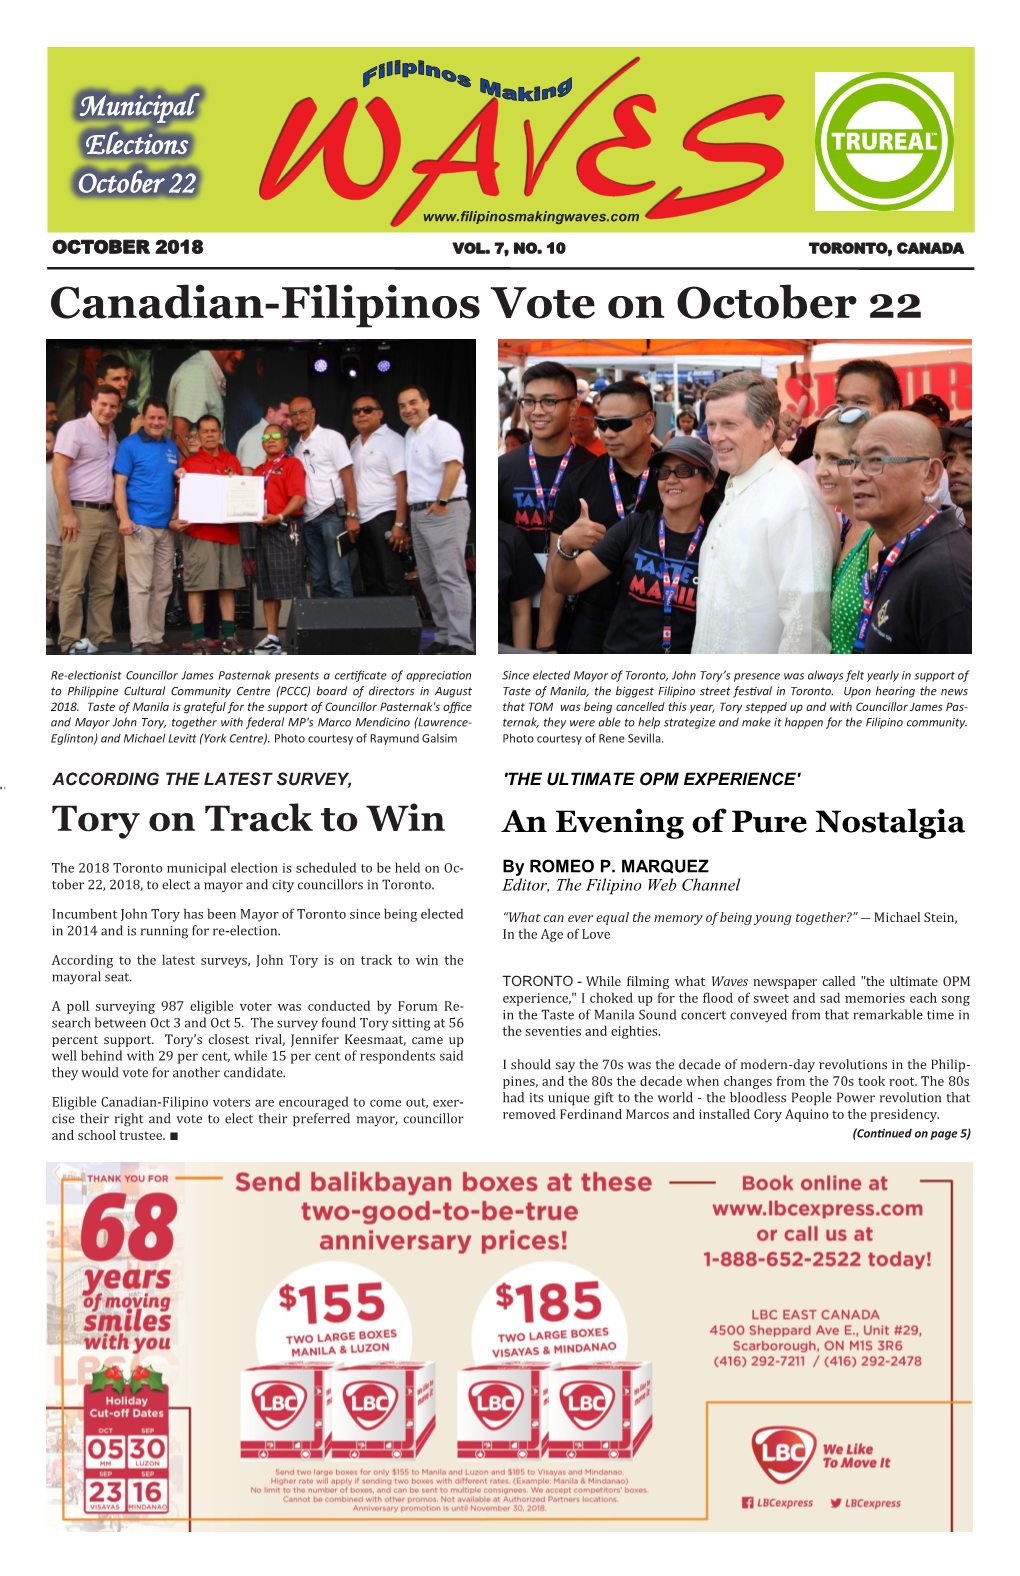 Canadian-Filipinos Vote on October 22